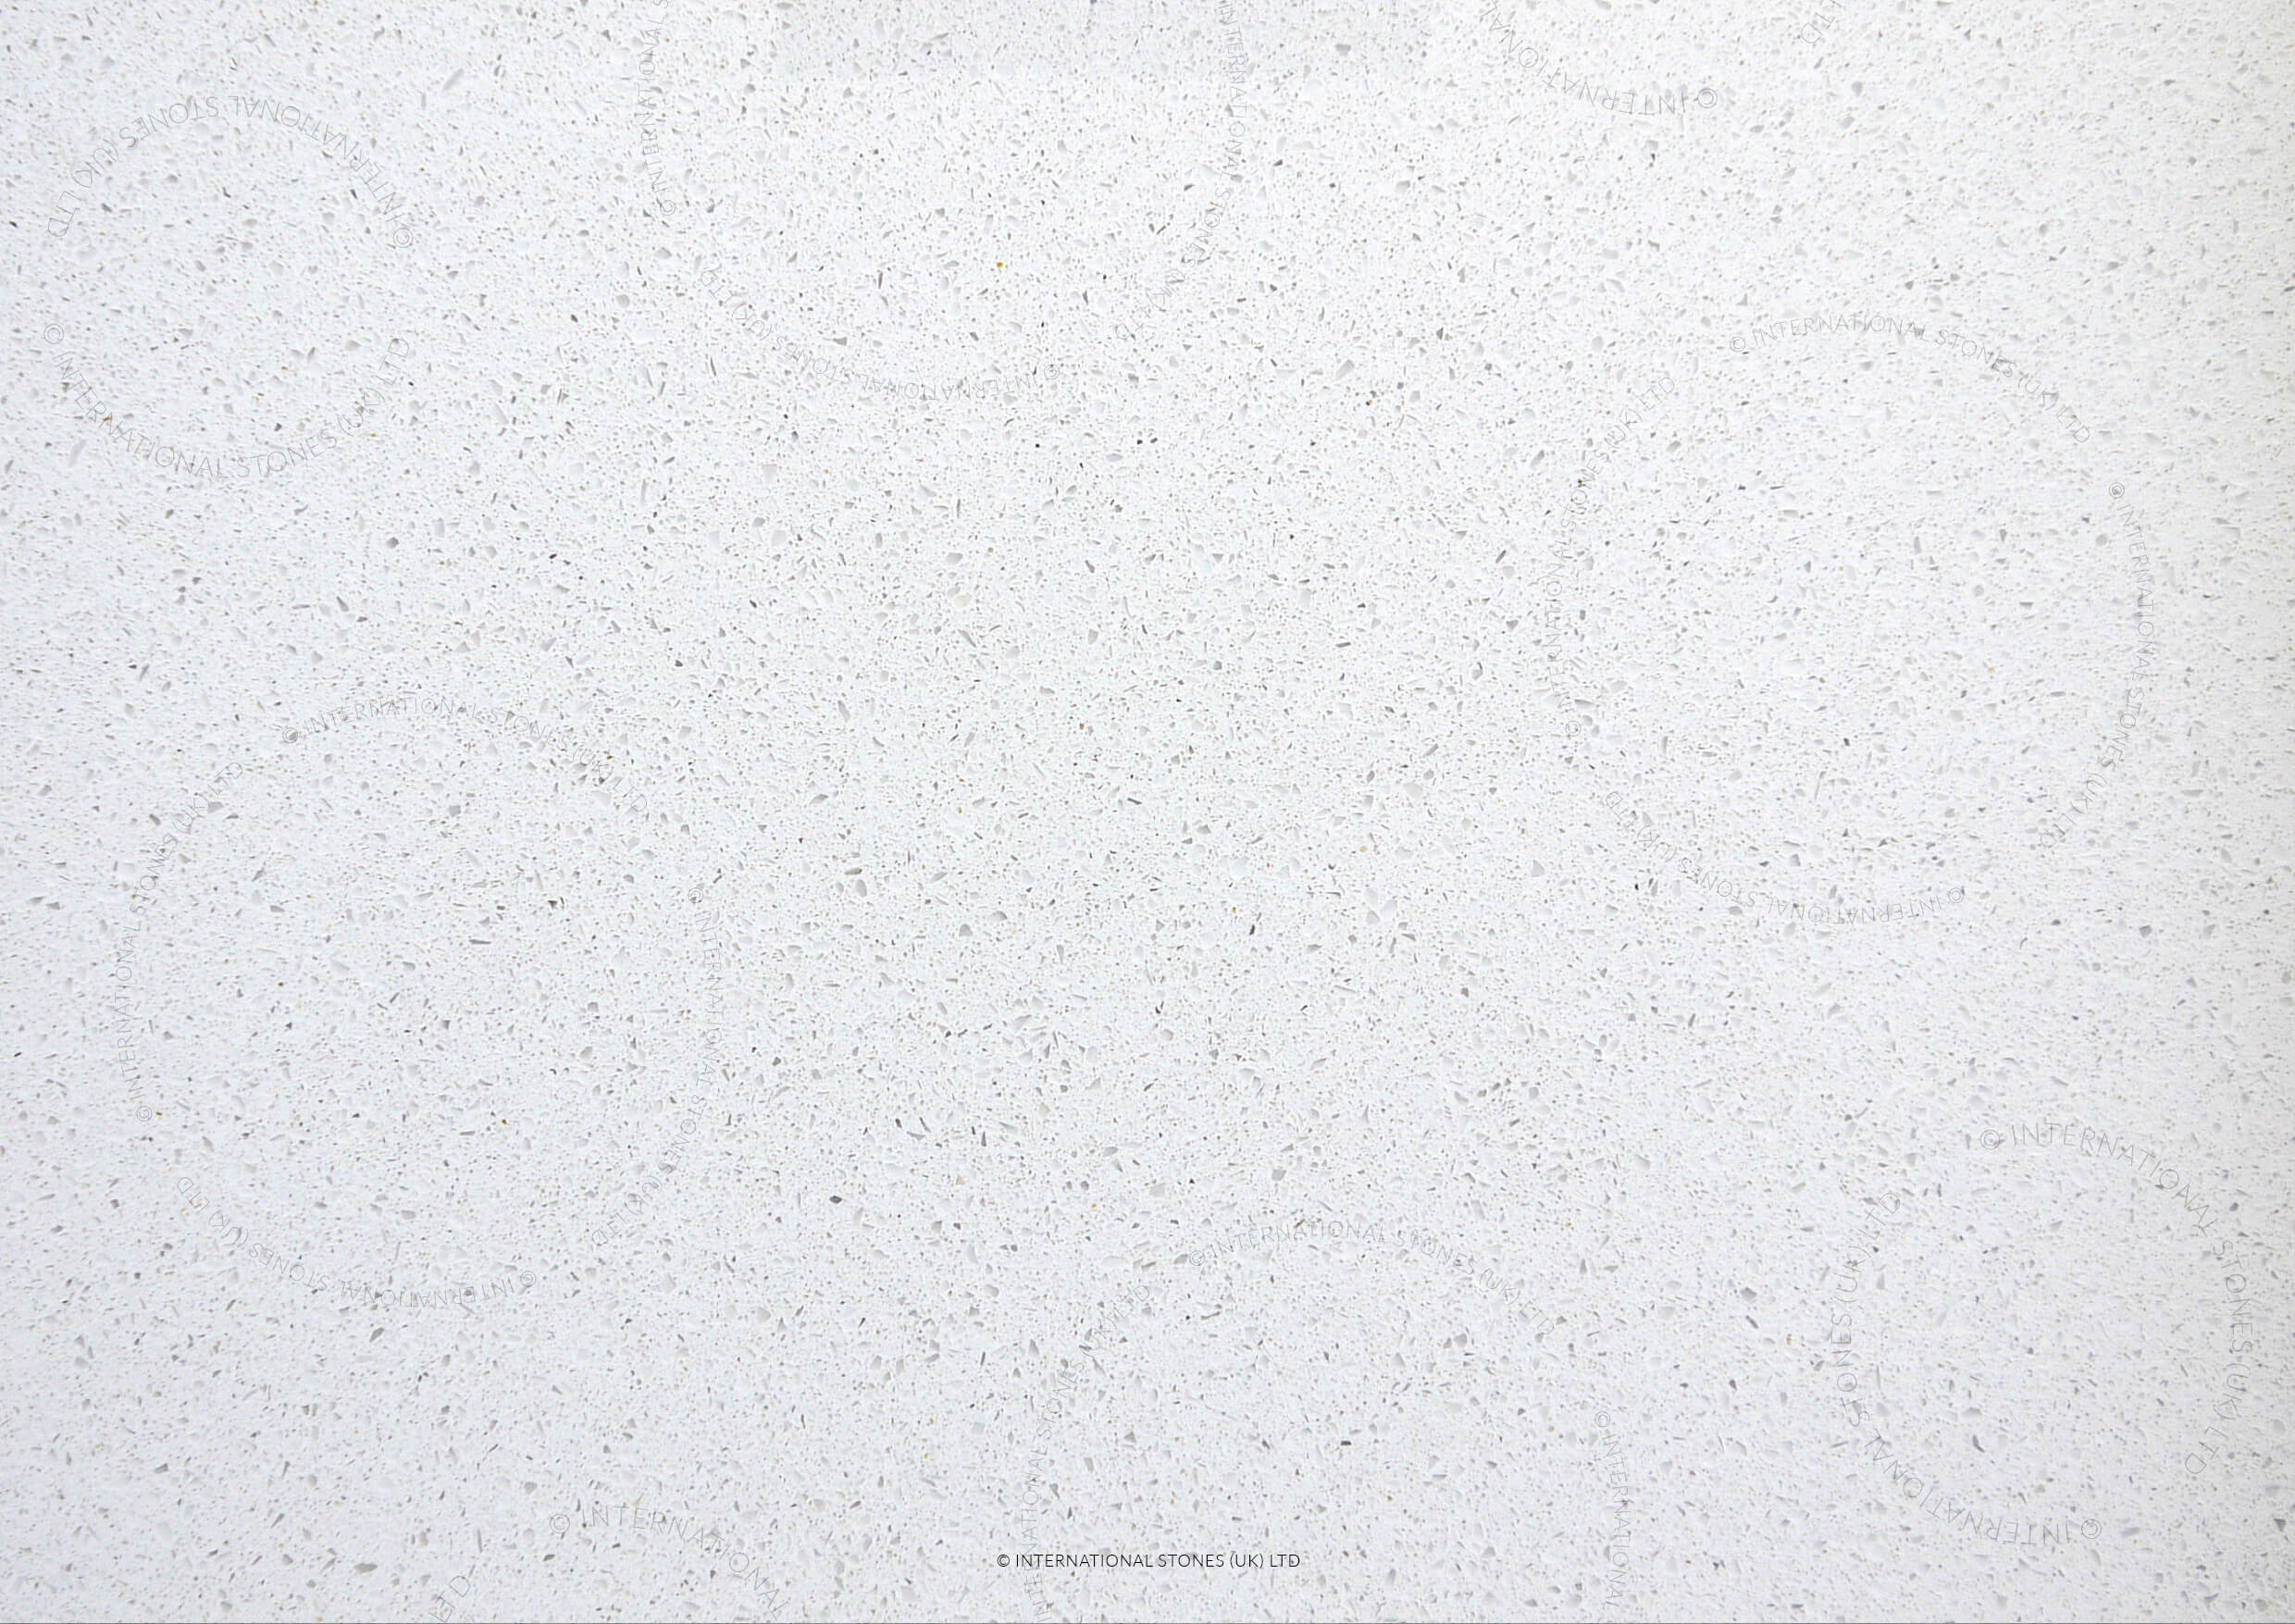 International Stone IQ Blanco Maple - leicestershire - Knipton